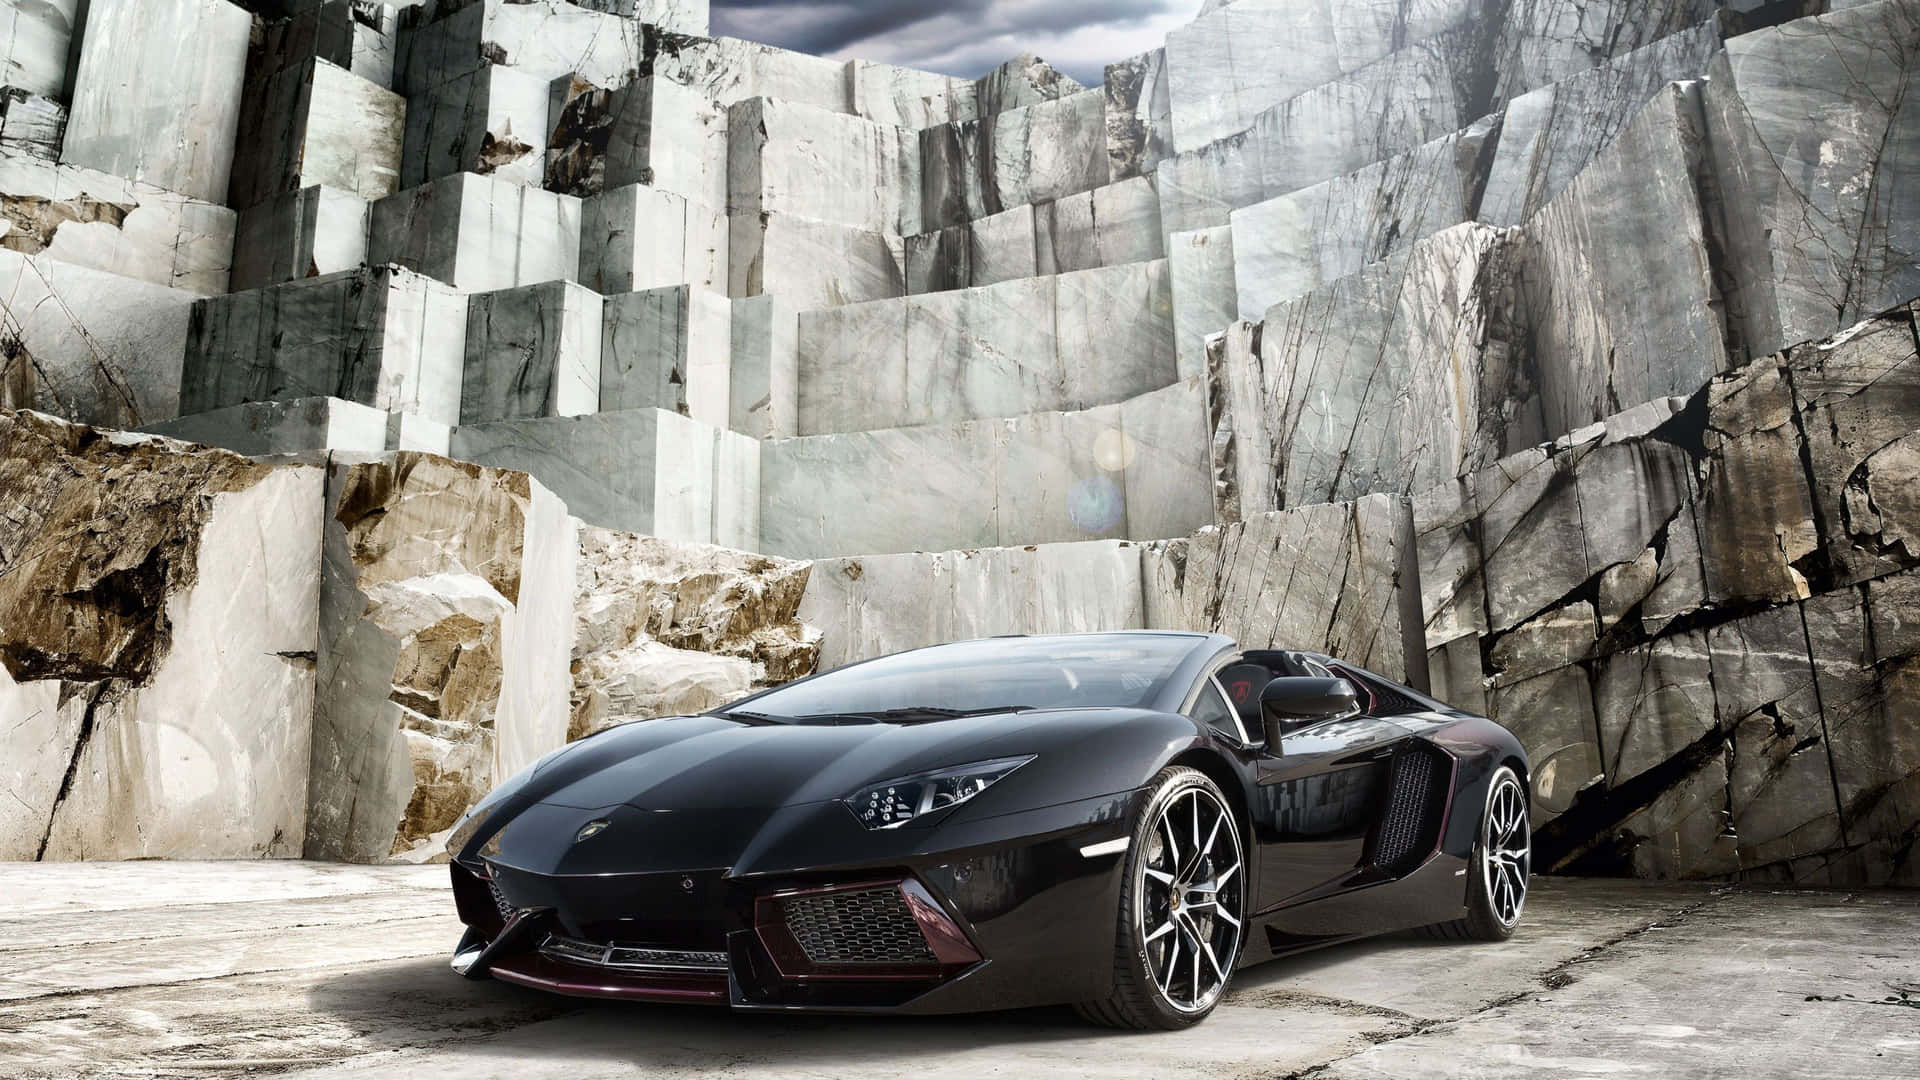 Experience the luxurious ride of a 4K Lamborghini